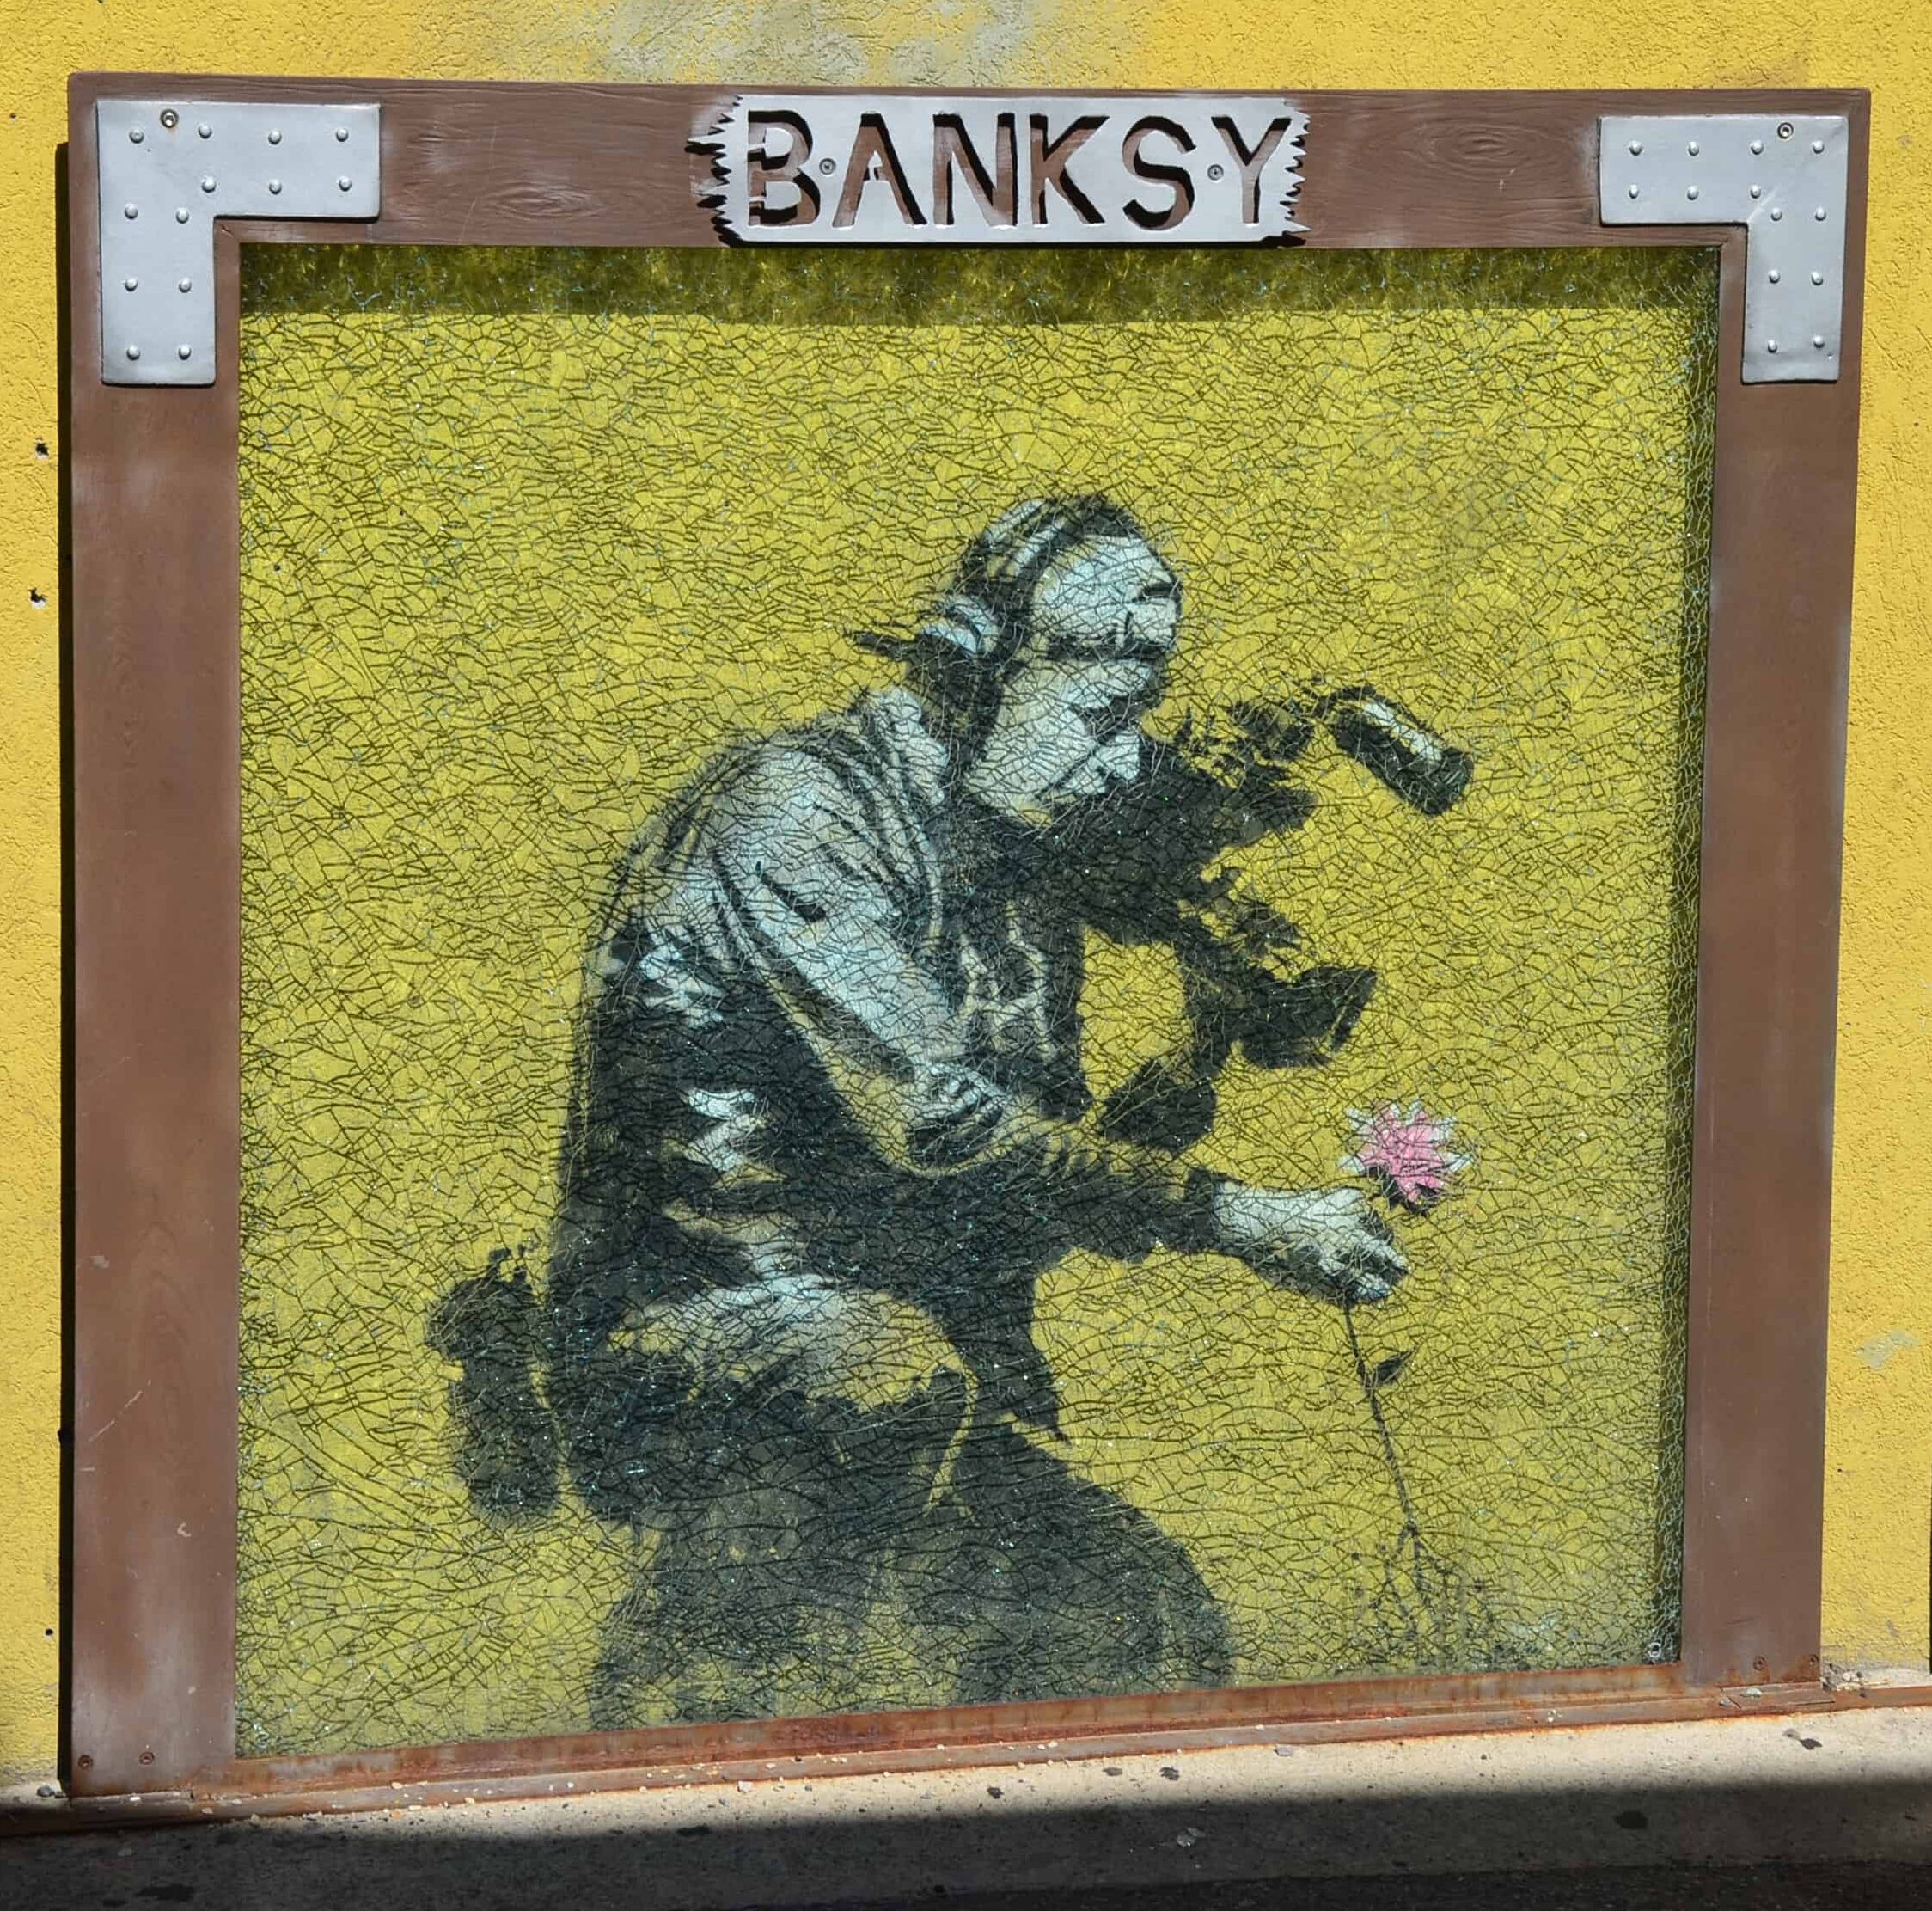 Banksy in Park City, Utah